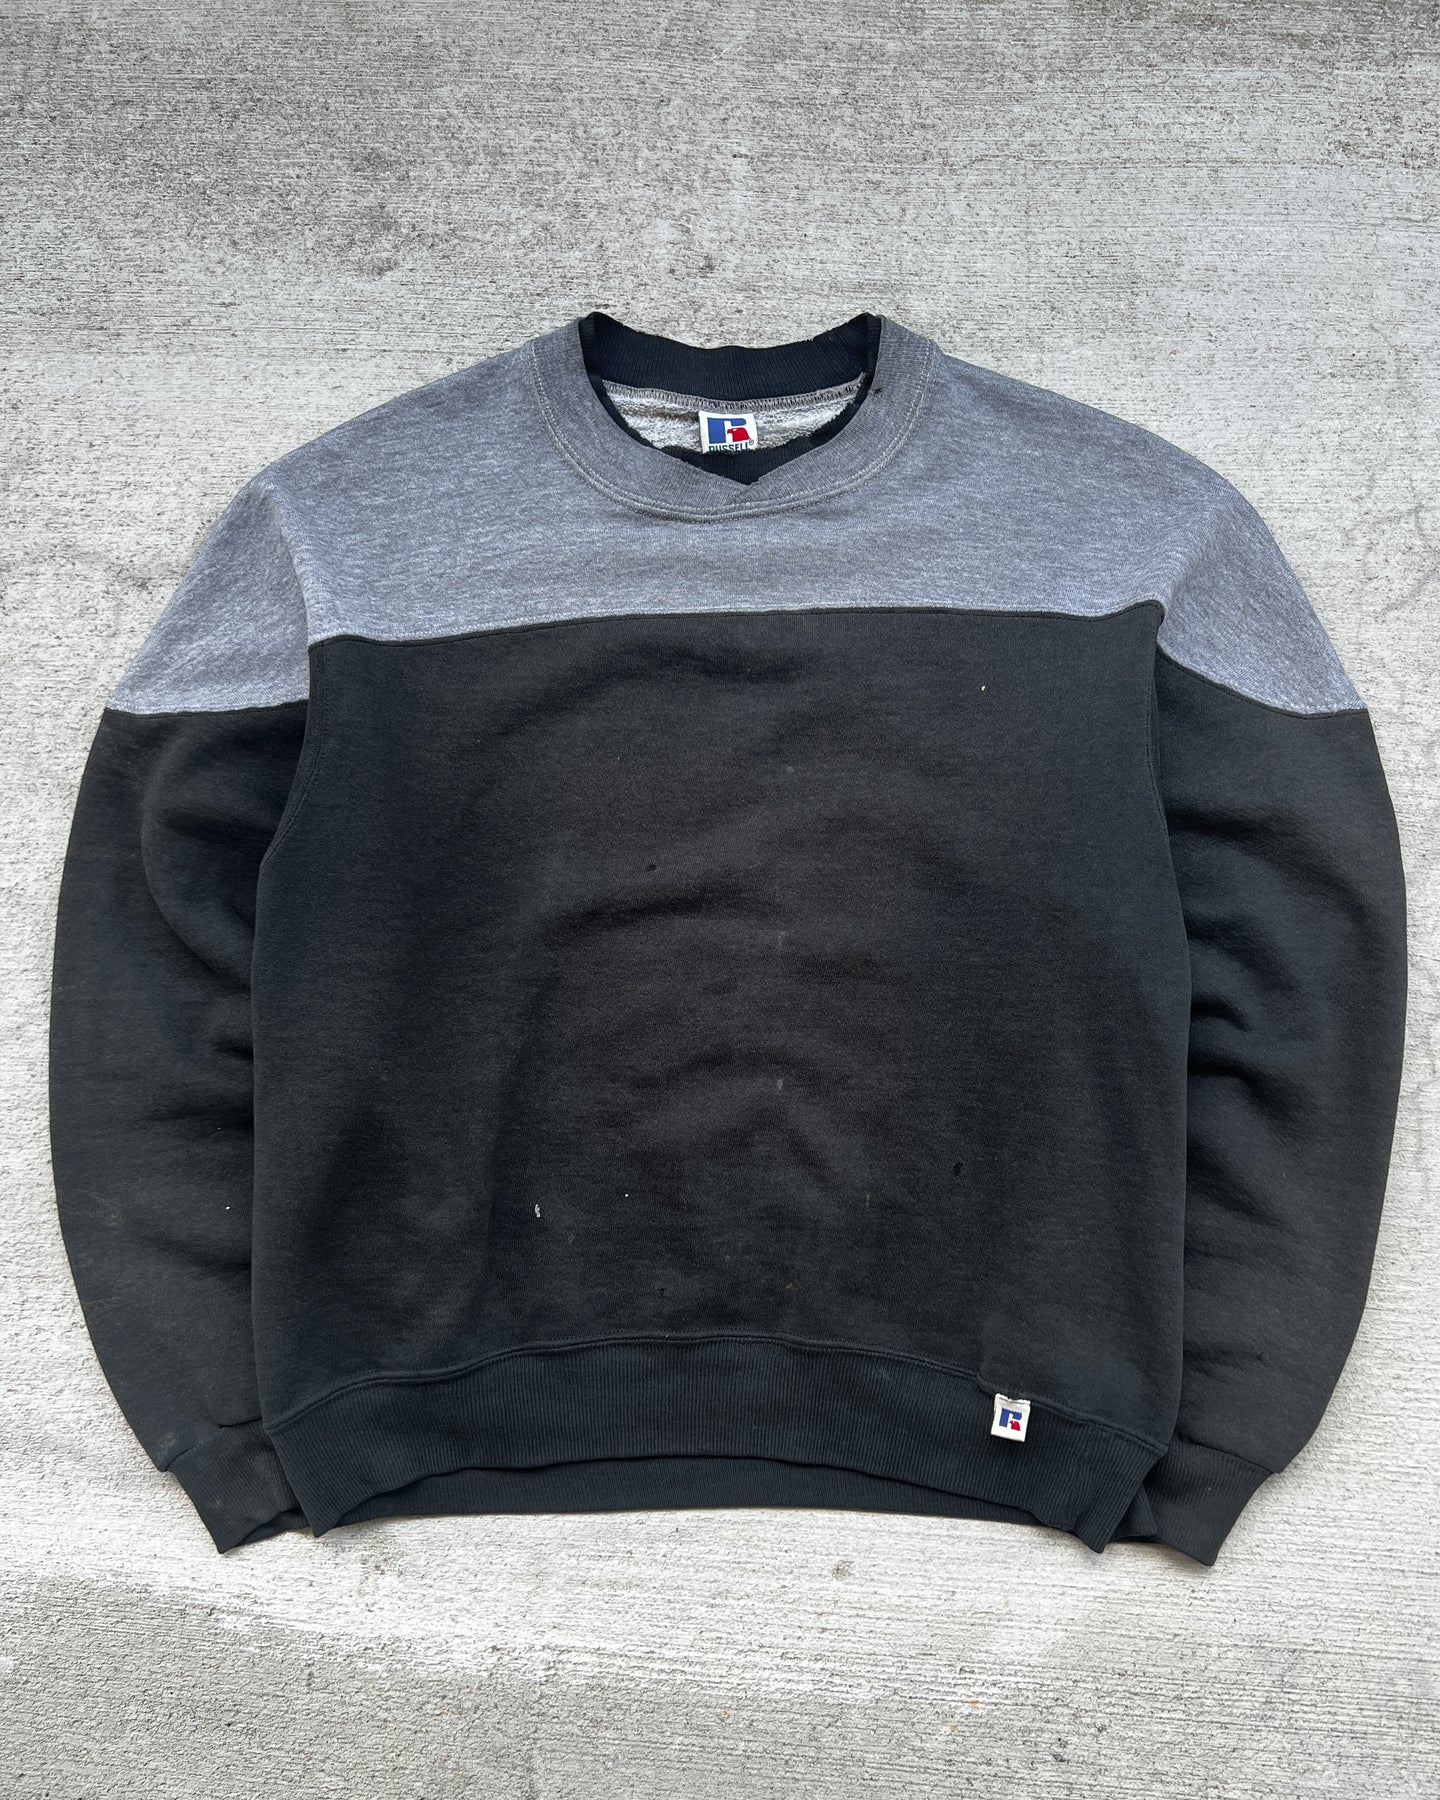 1990s Russell Athletic Colorblock Crewneck Sweatshirt - Size Medium